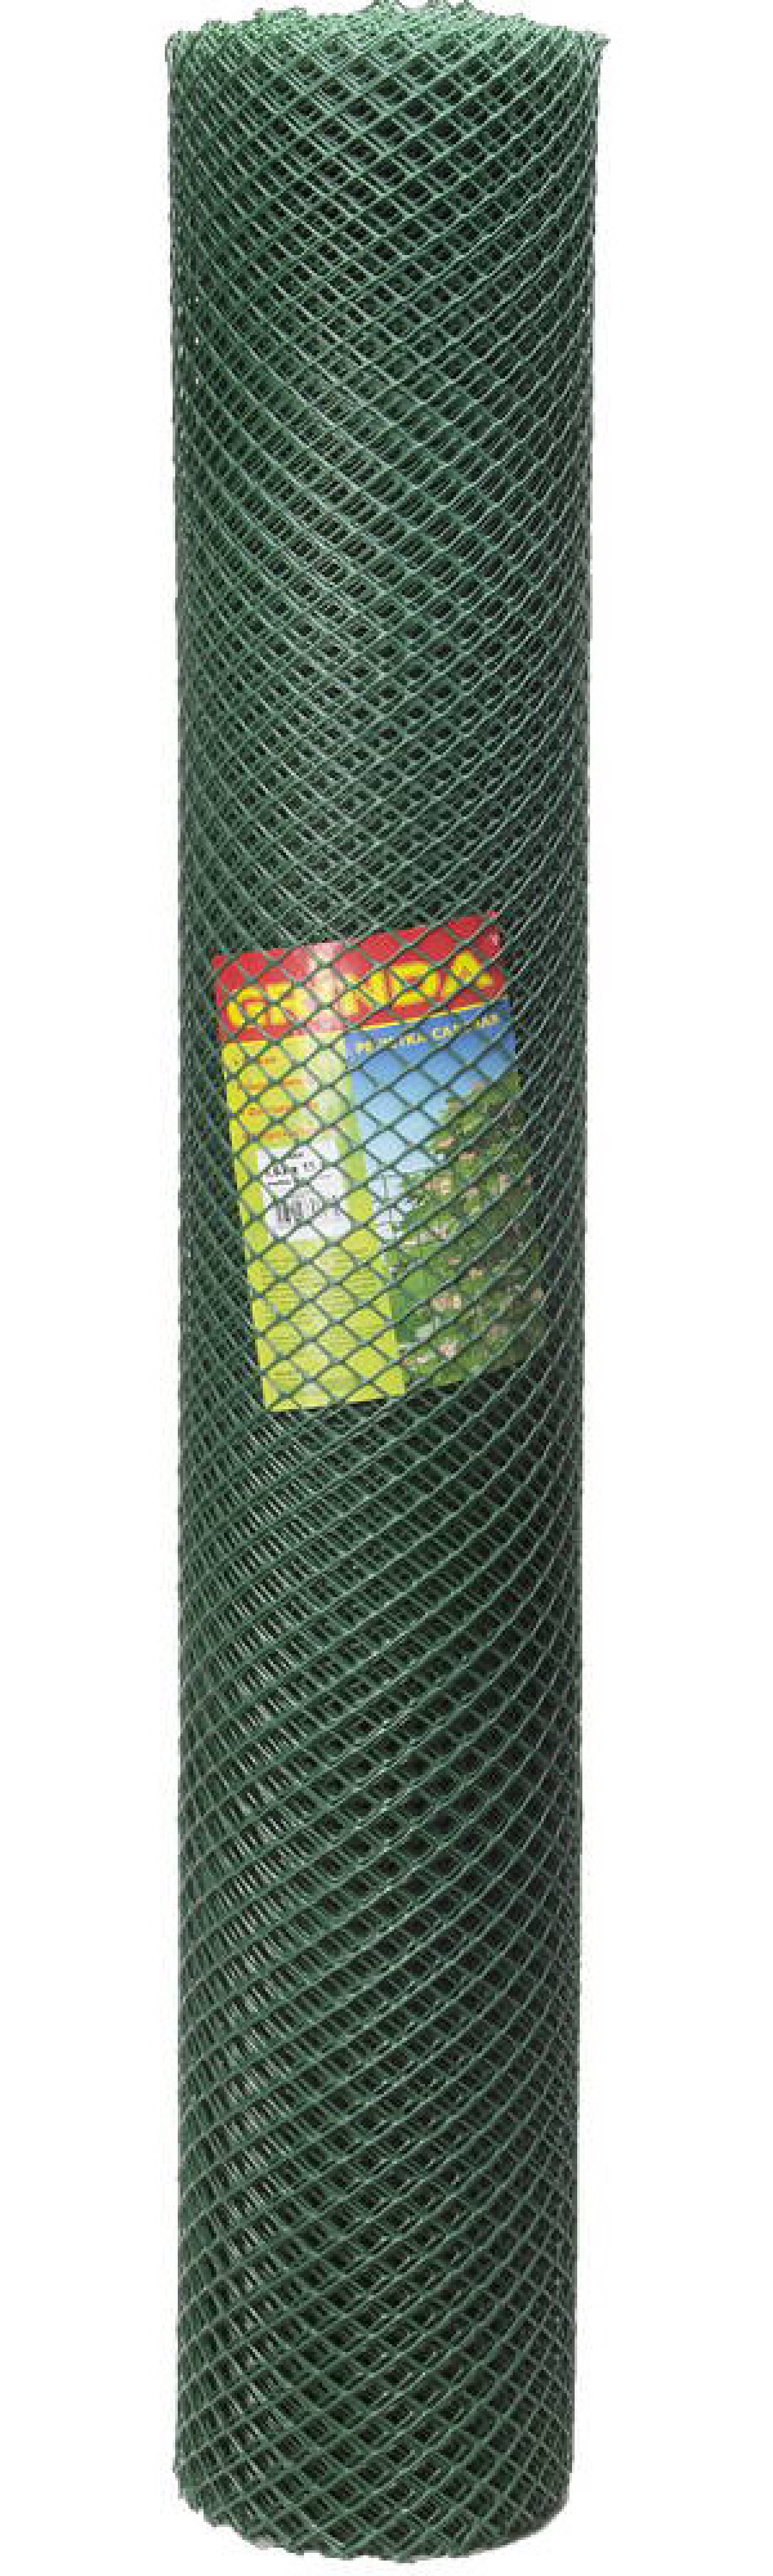 Садовая решетка GRINDA цвет хаки, 1.63x15 м, 18х18 мм 2 шт. (422277)